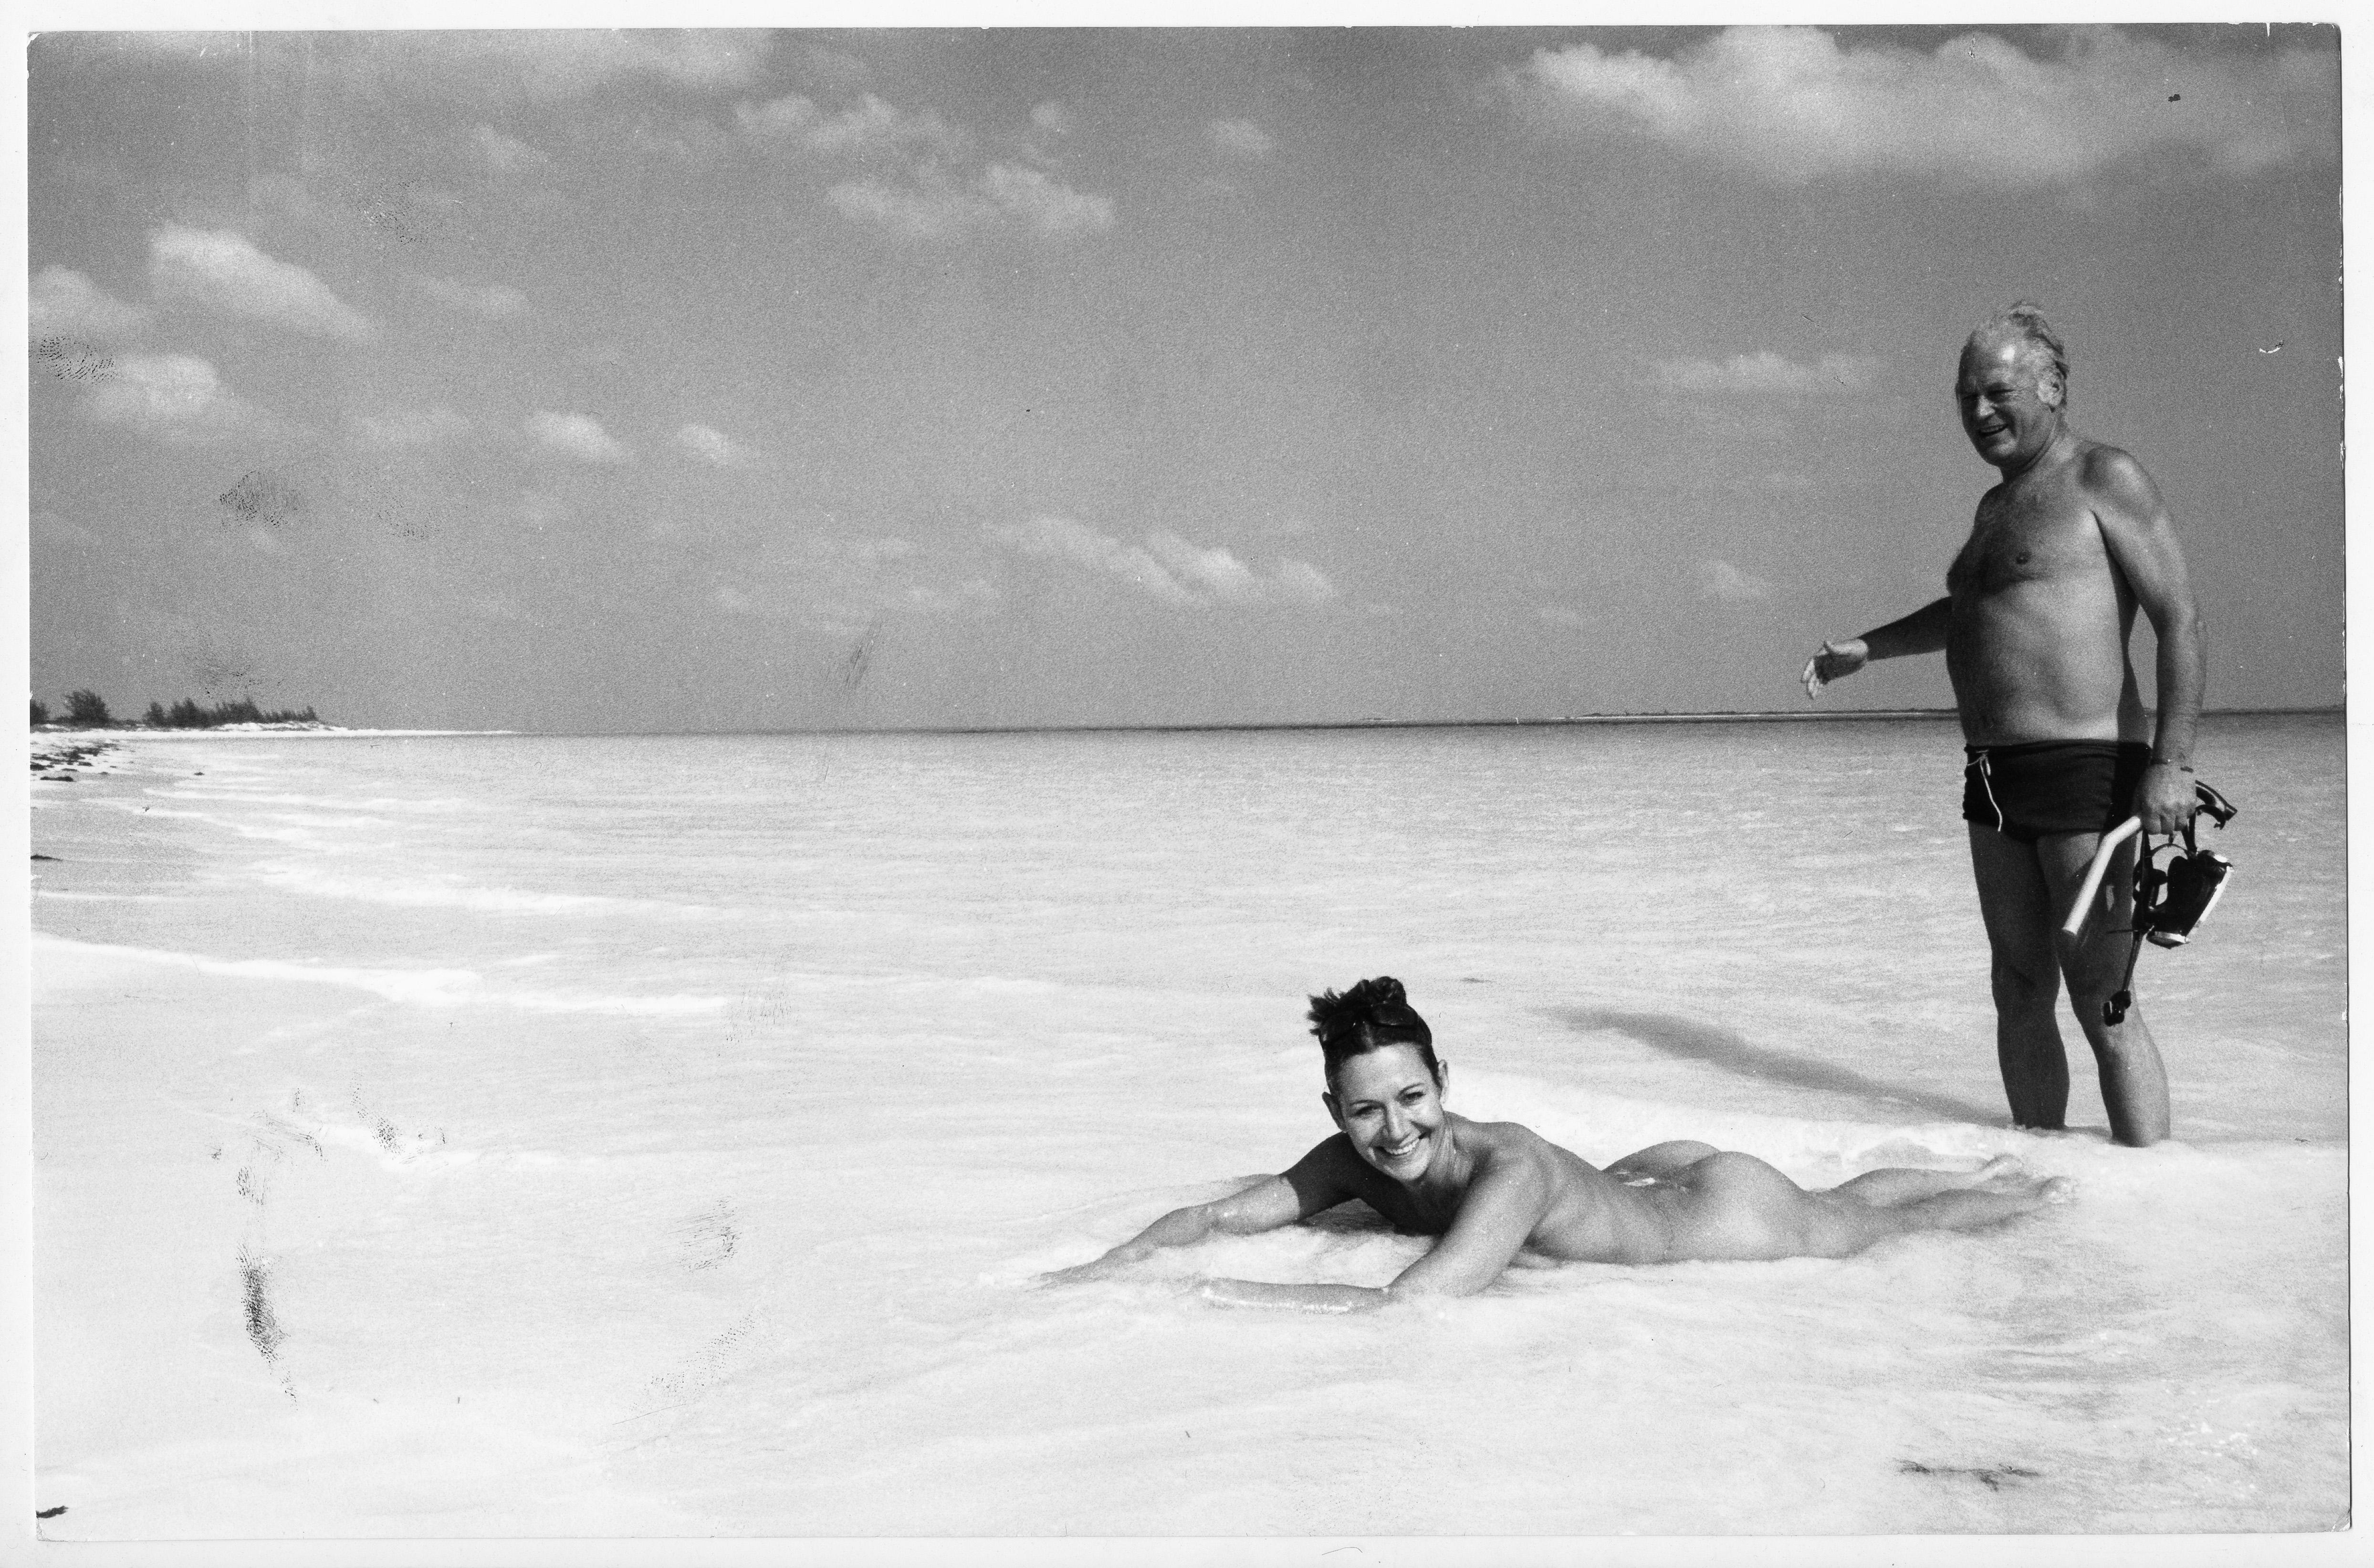 Emil Perauer Black and White Photograph - Bahamas - Curd Jürgens and Wife Simone (Bicheron) on the beach, circa 1971.